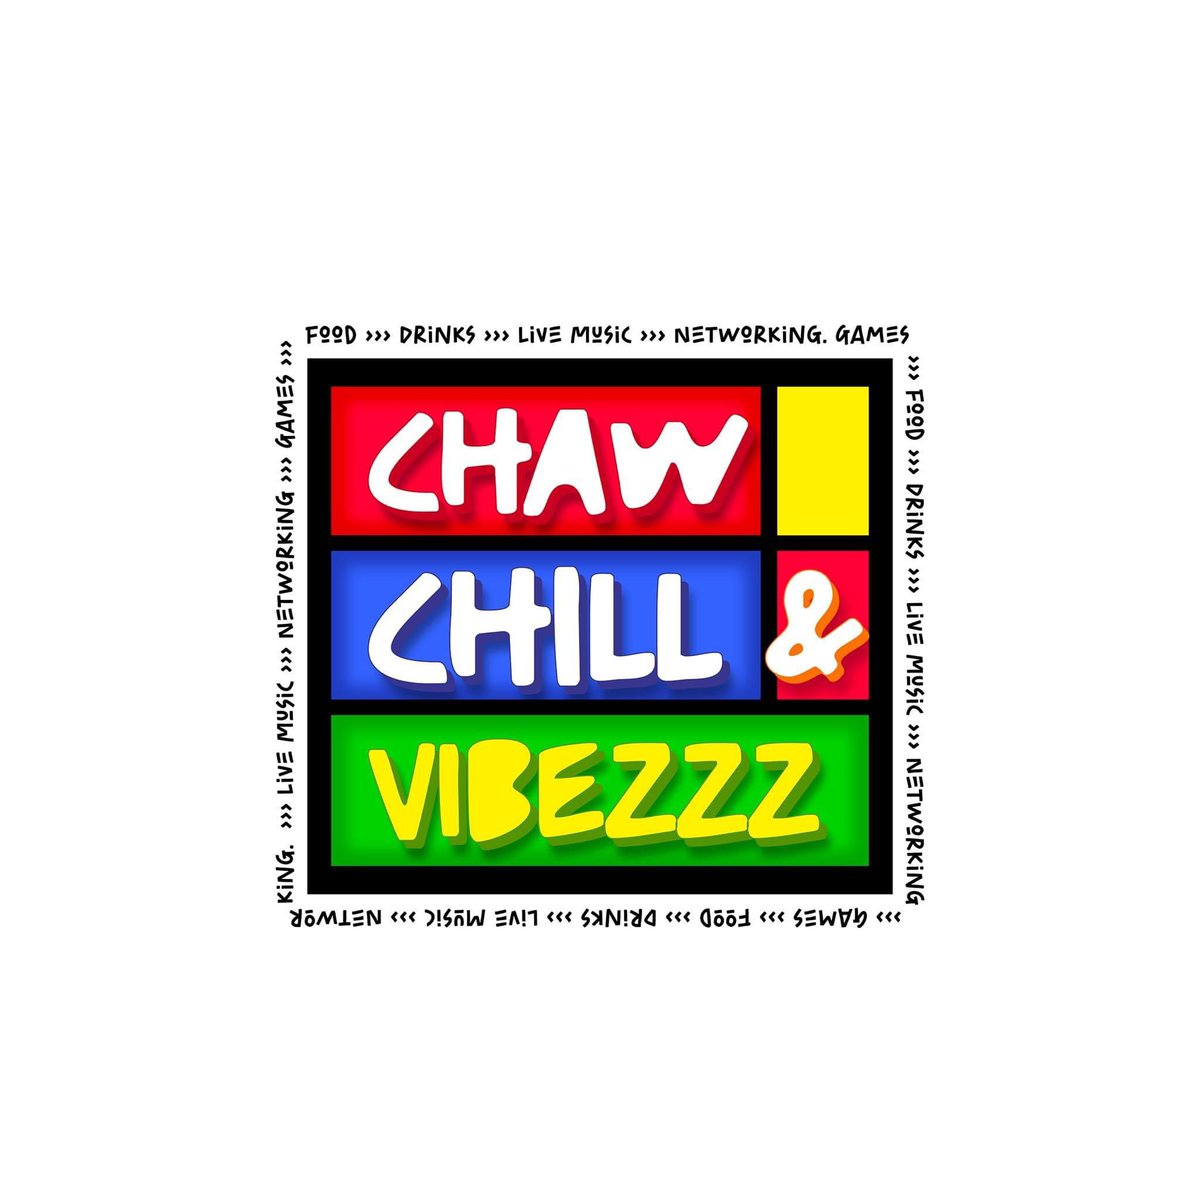 Chaw, Chill & Vibezzz 
#CCVisComing